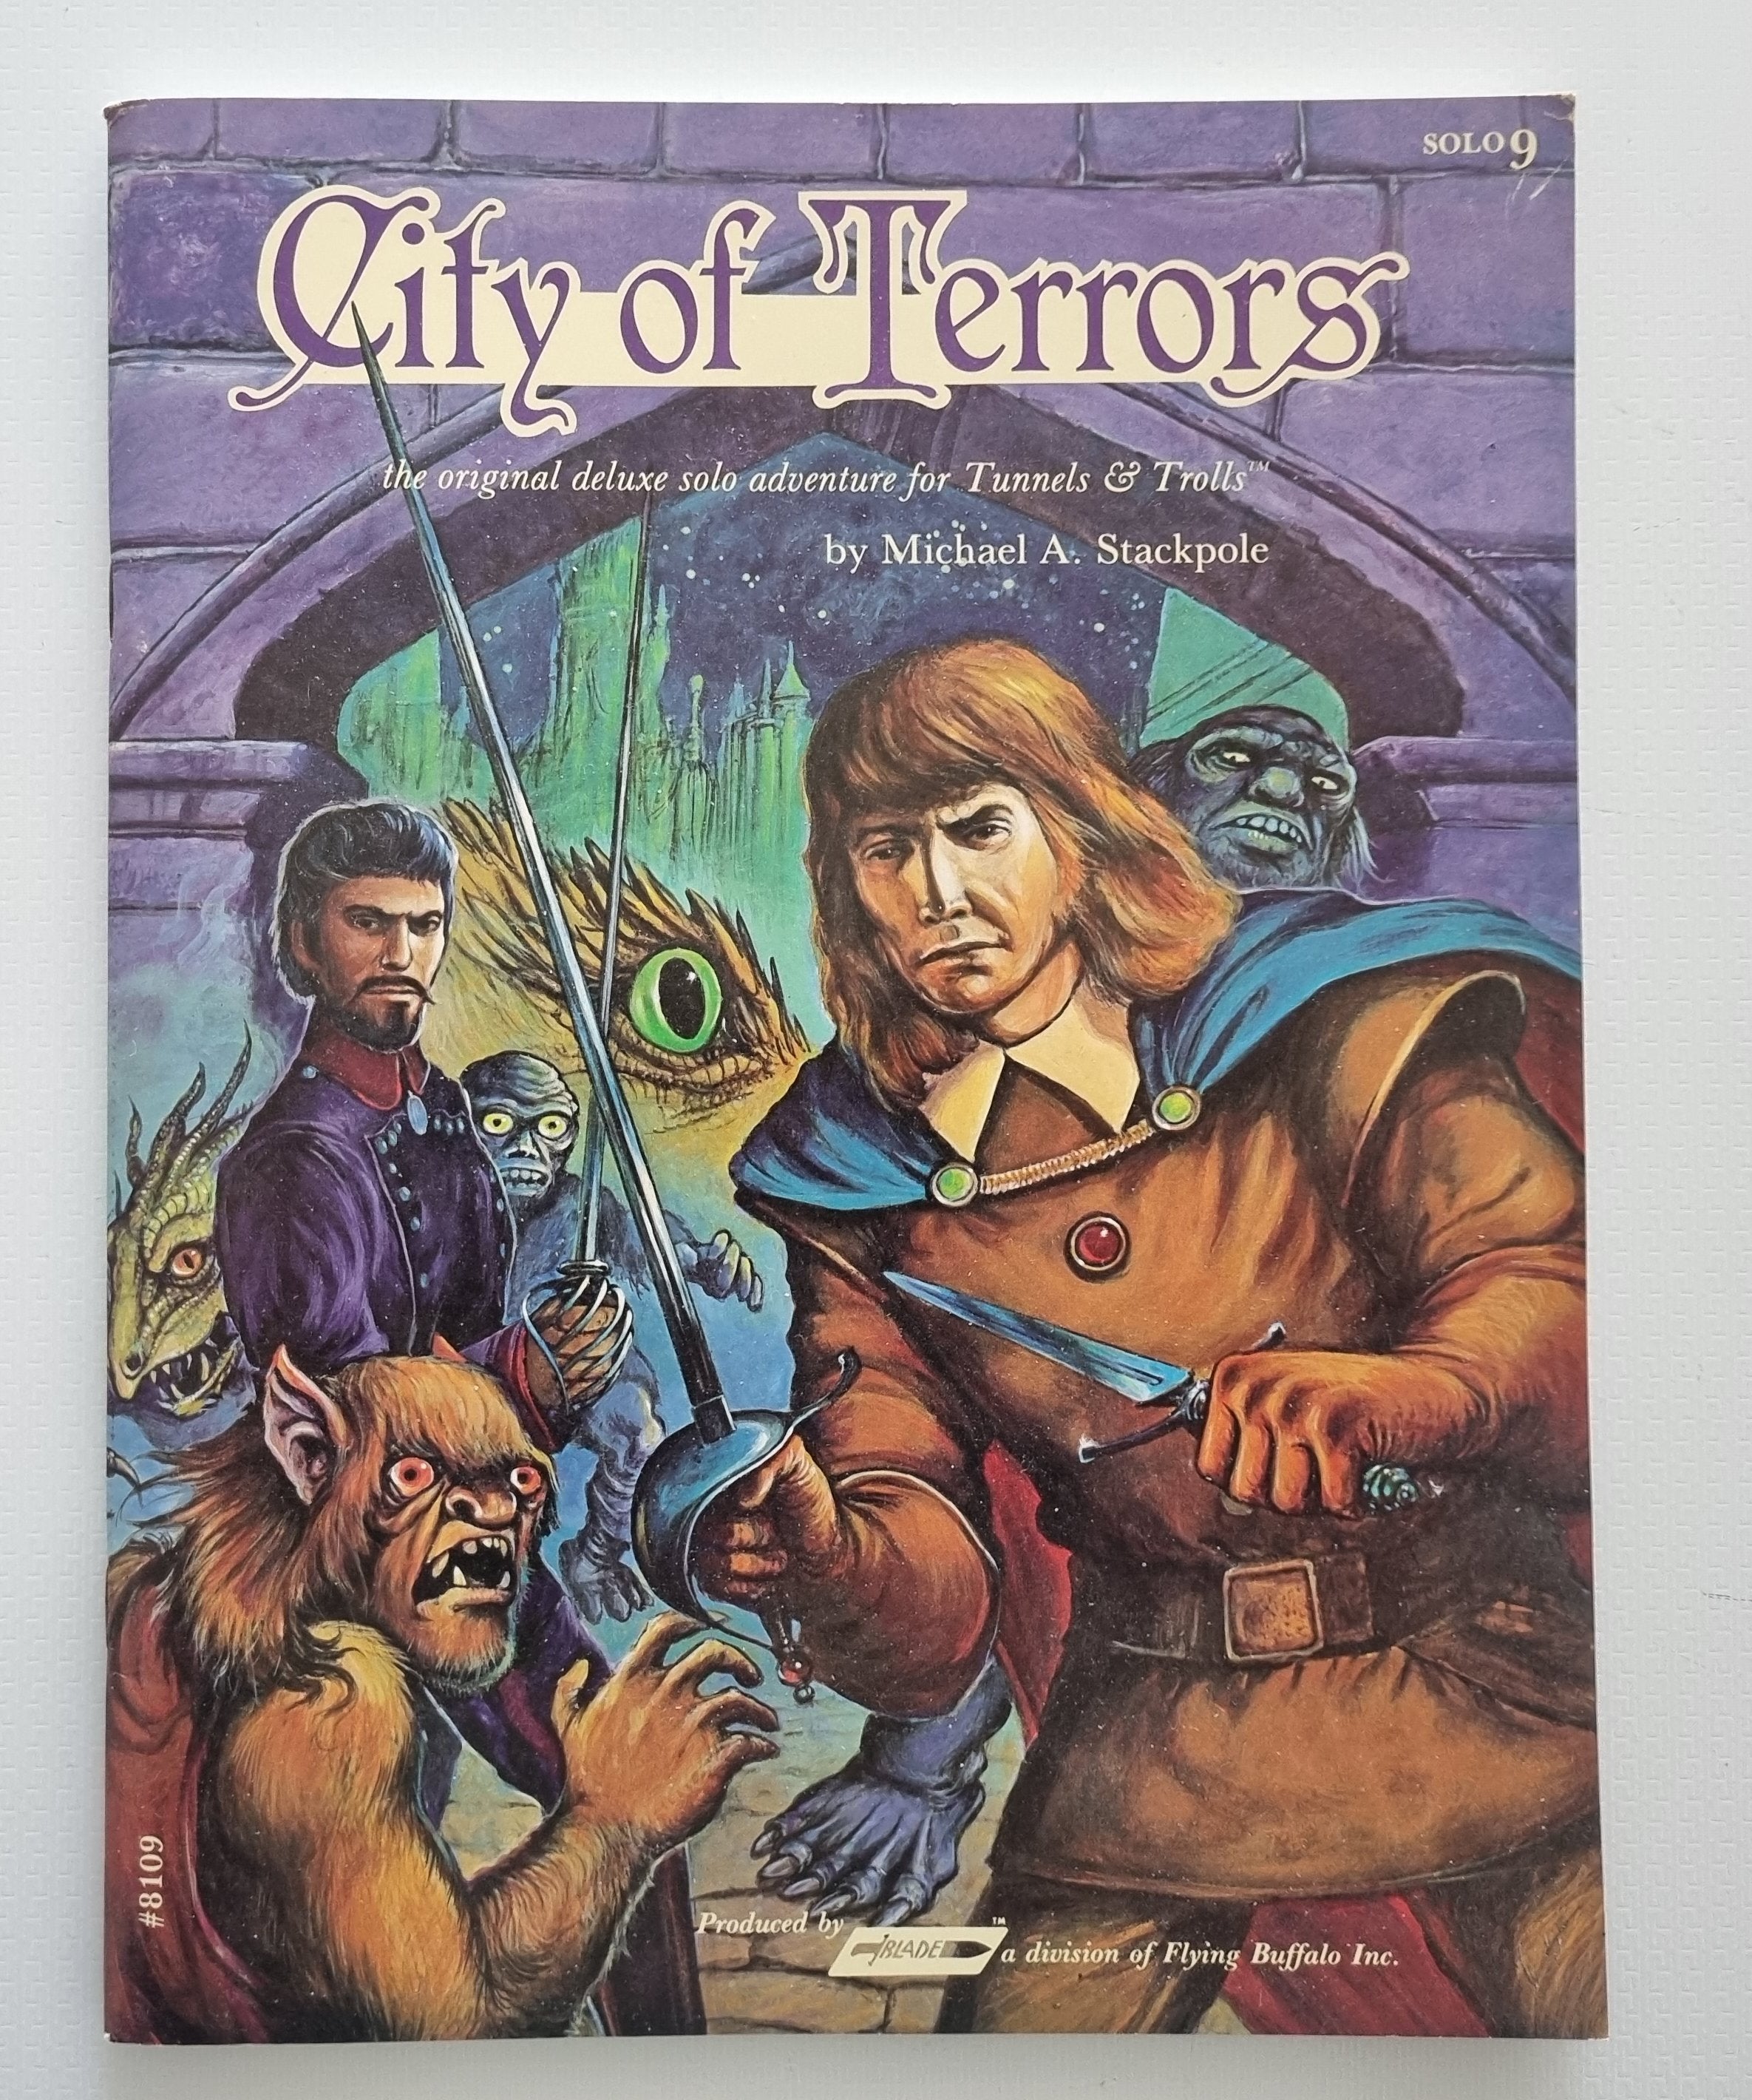 City of Terror - Tunnels & Trolls Solo Adventure